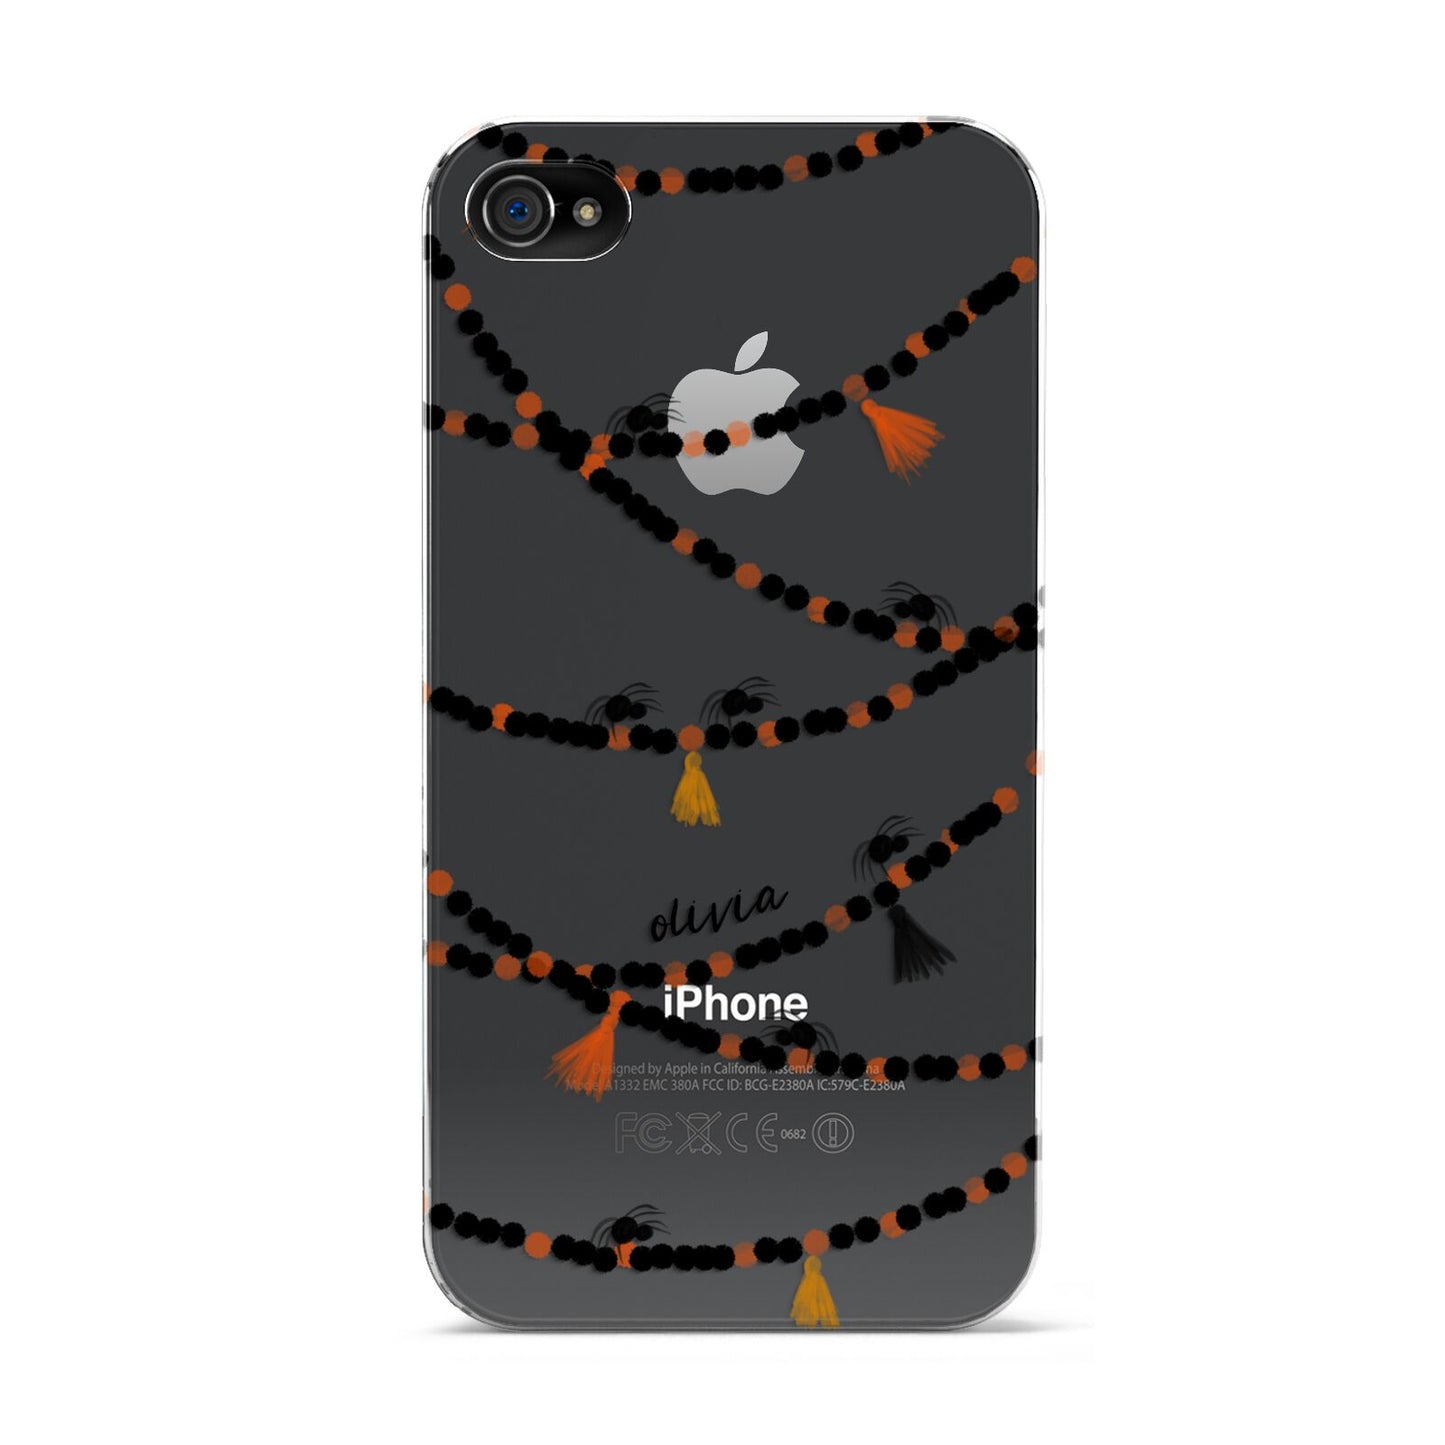 Spider Halloween Apple iPhone 4s Case